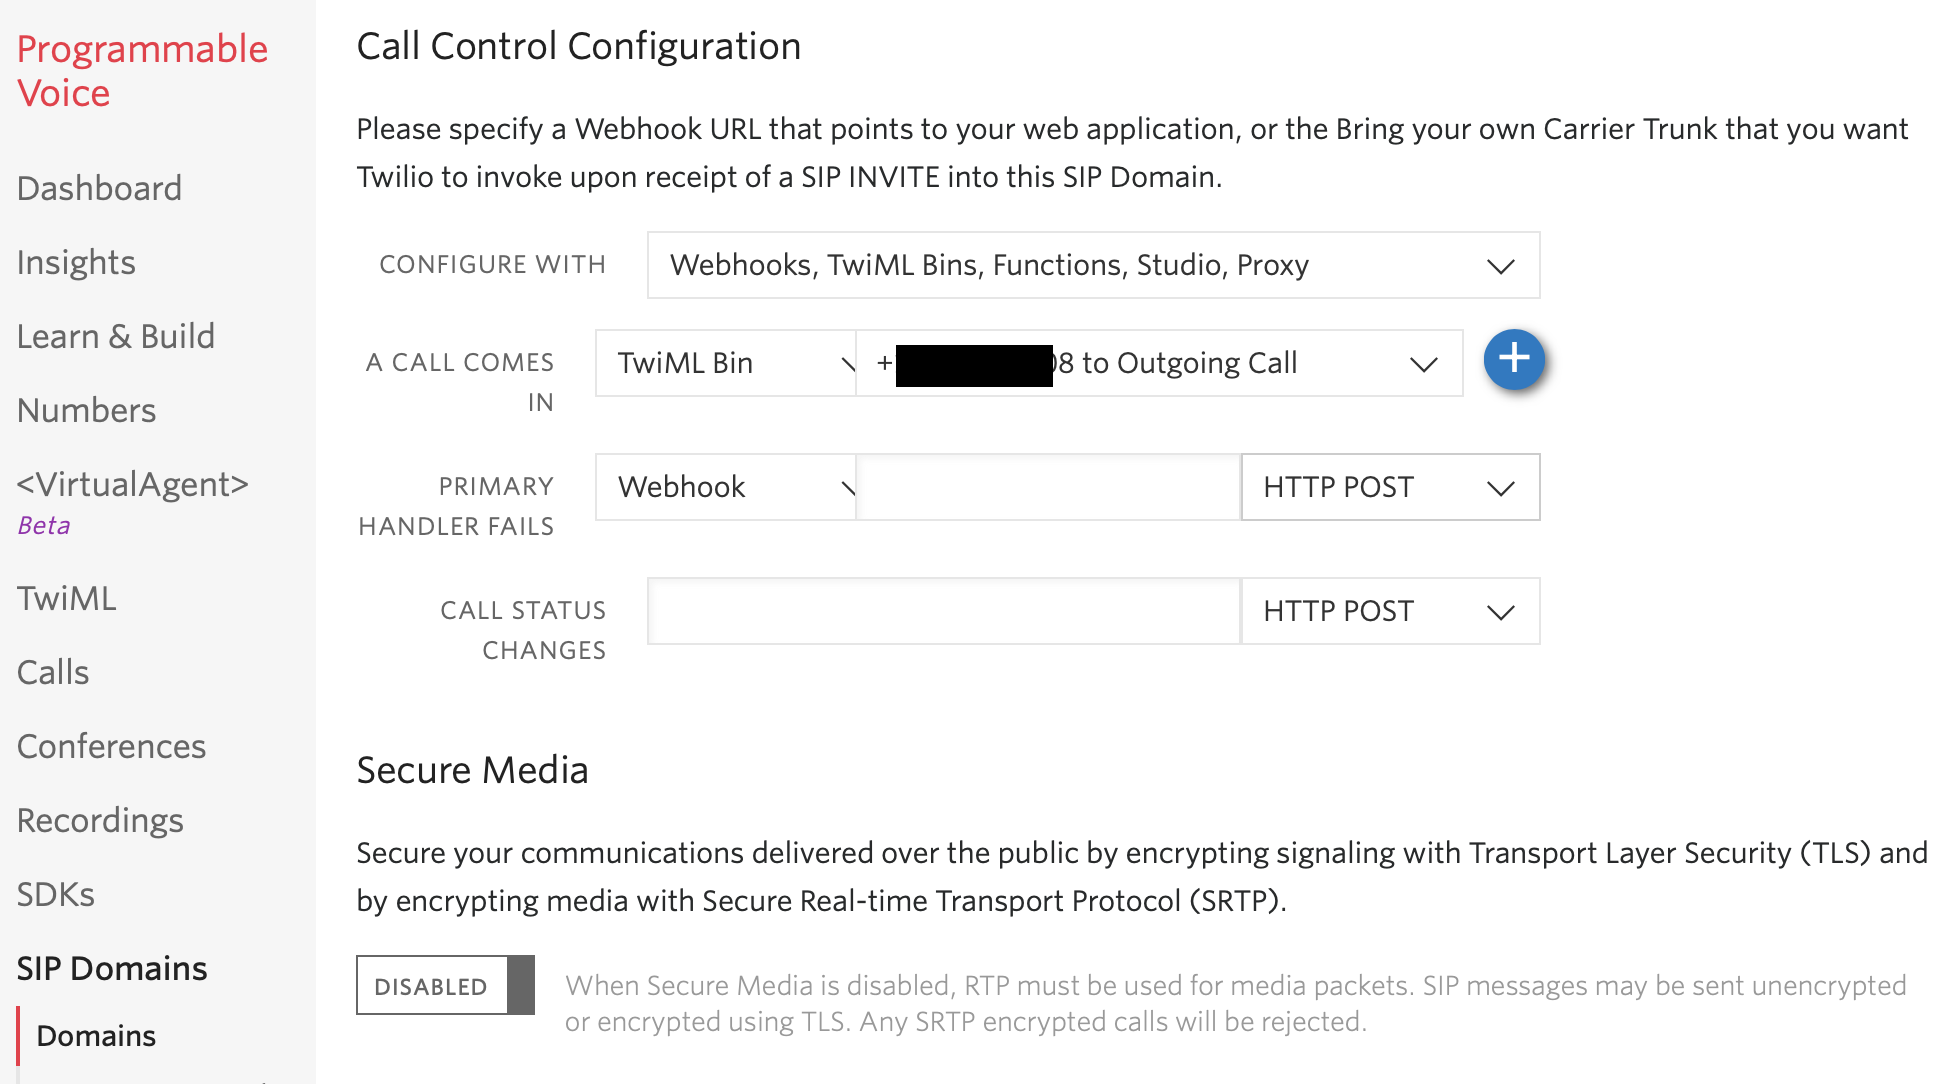 Twilio Wake Up Call - Outgoing Call Configuration